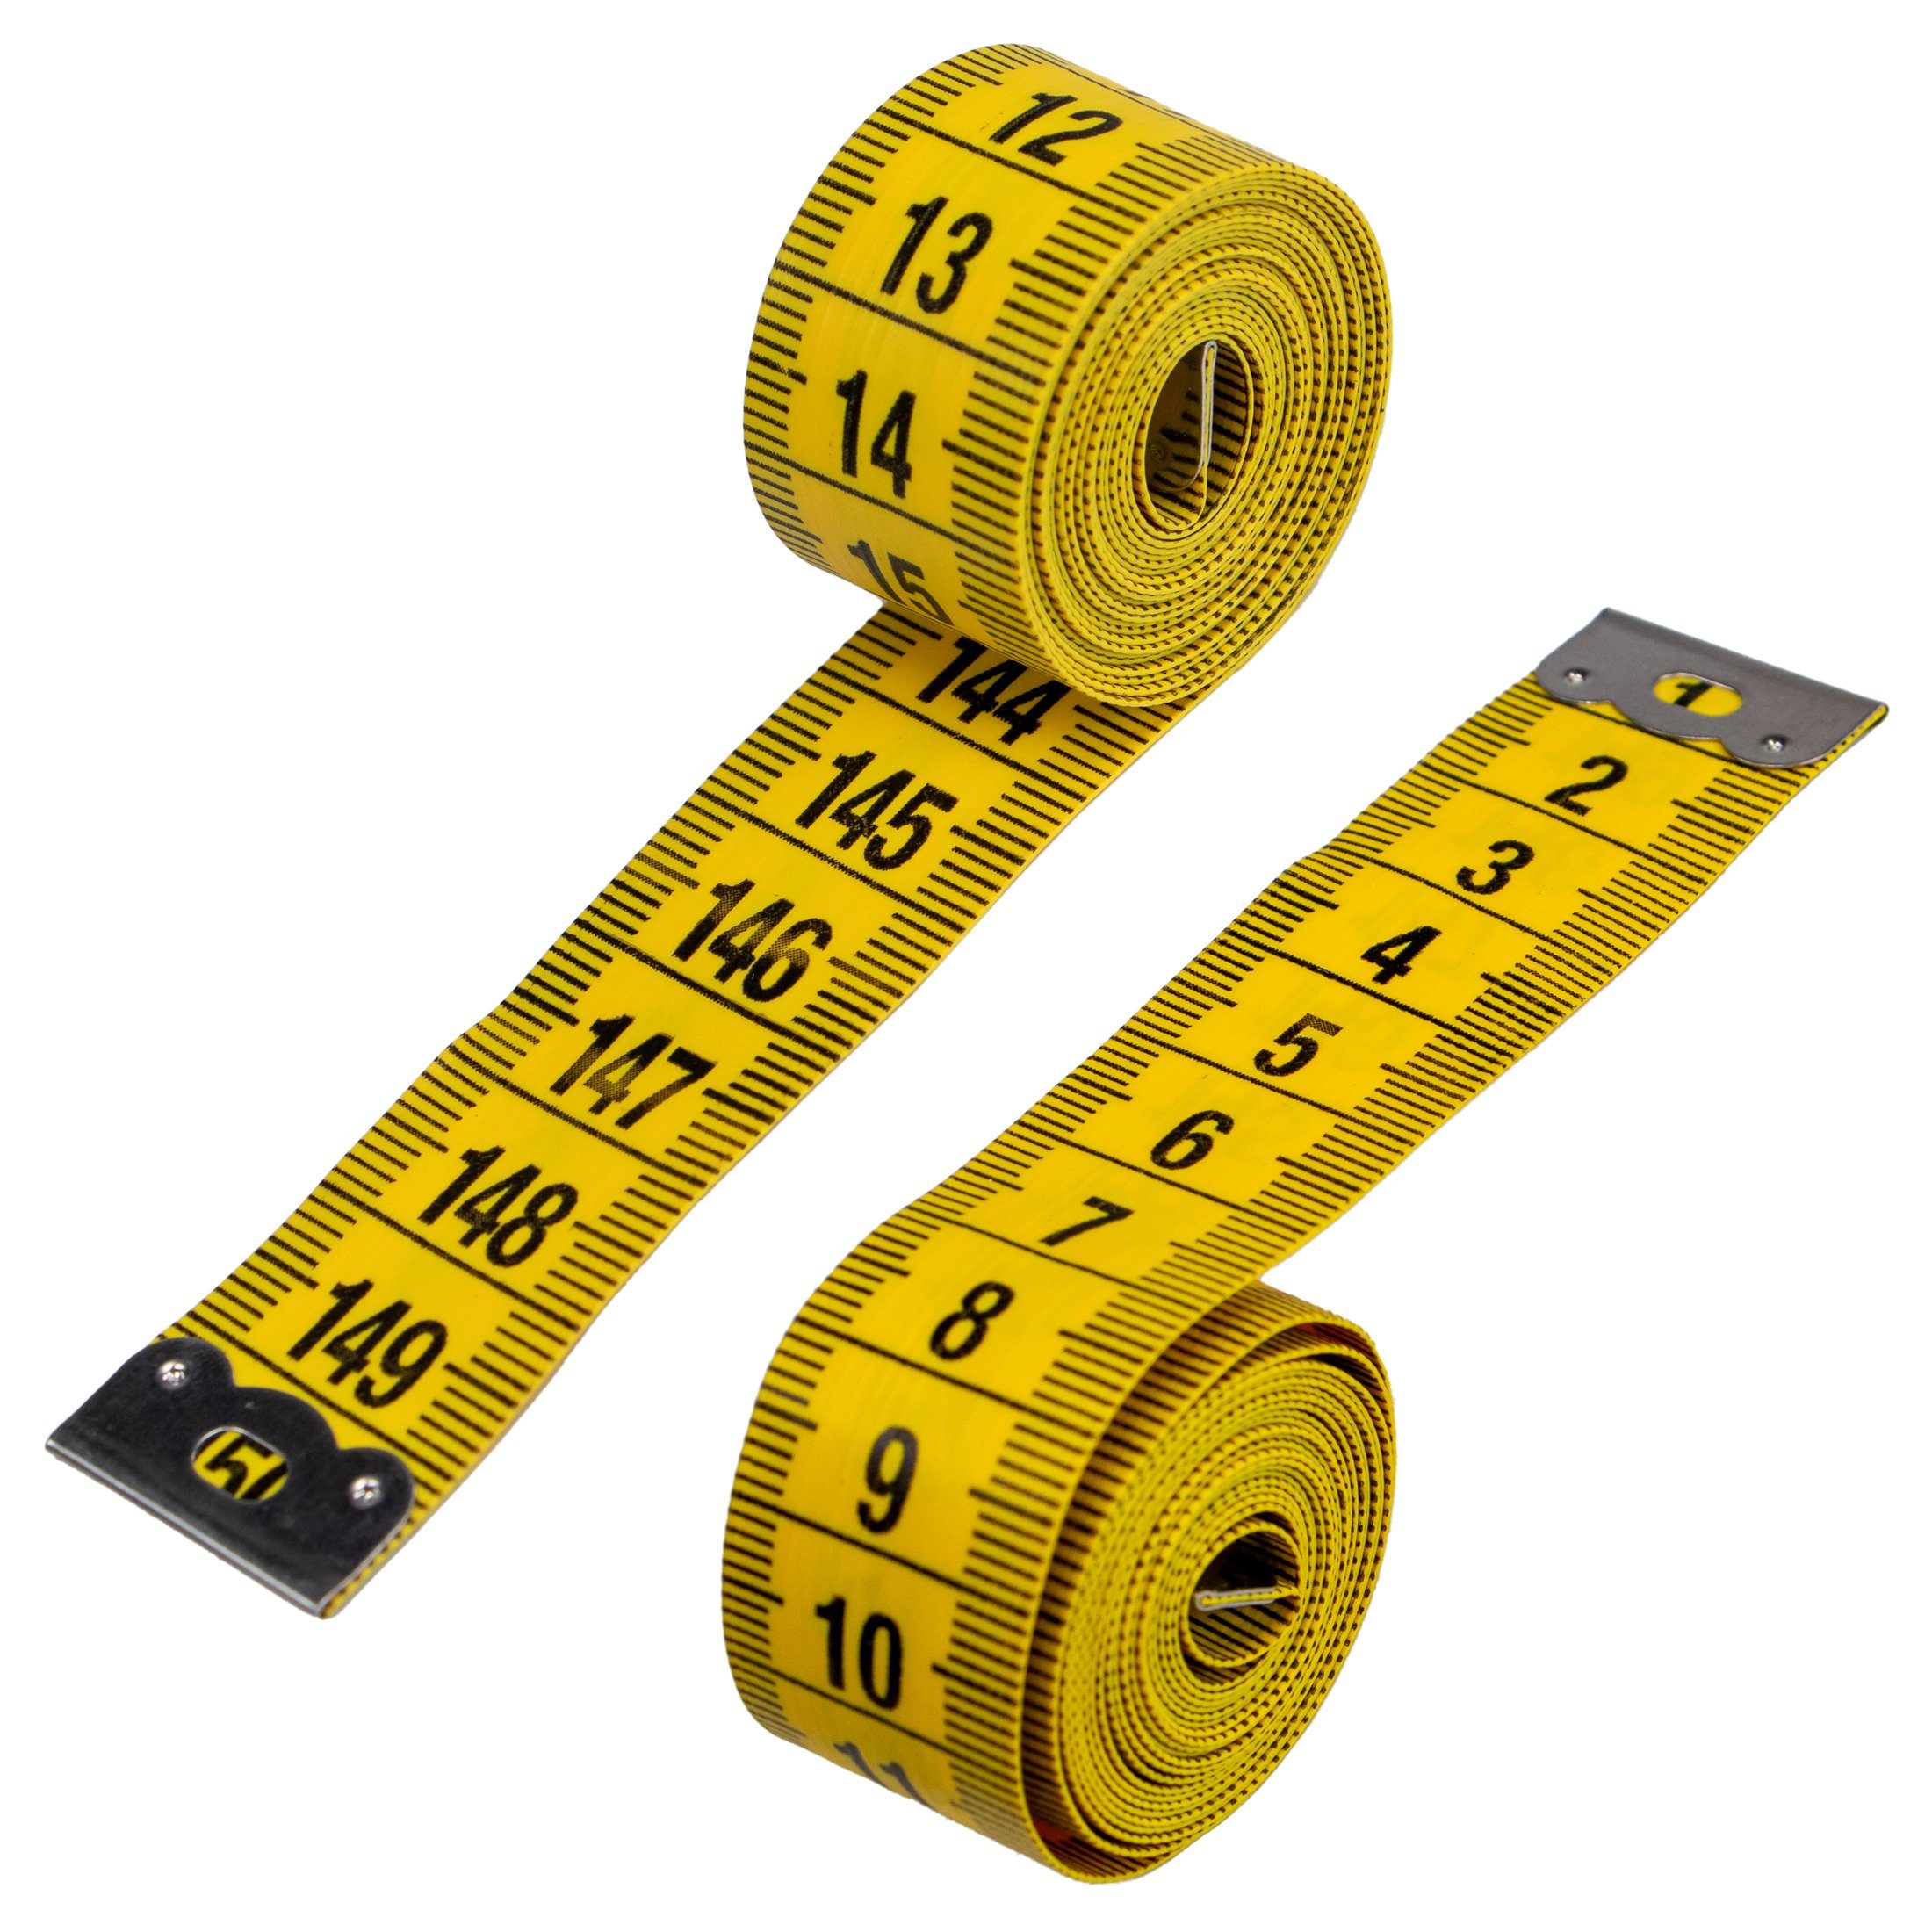 EDCO Maßband 2er Set Schneidermaßband 150cm flexibles Maßband, gut ablesbare Skalierung, Textil Maßband